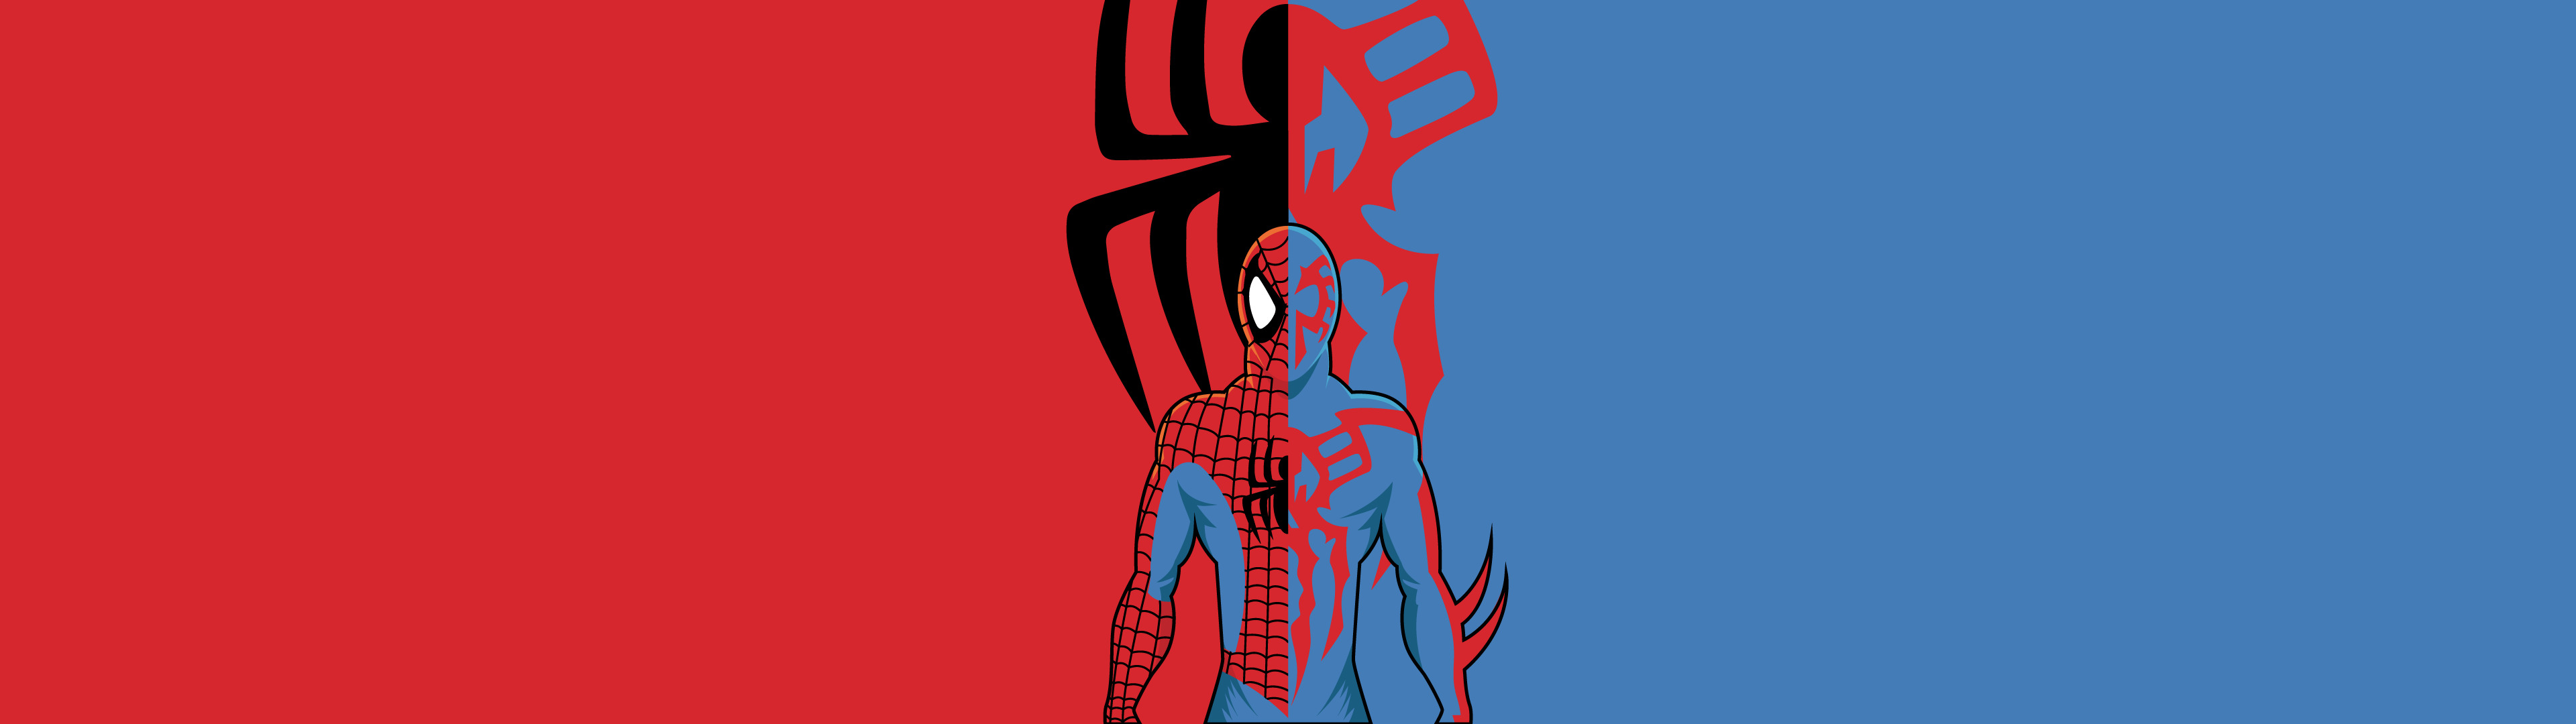 Spider Man, Marvel Comics, Superhero Wallpaper